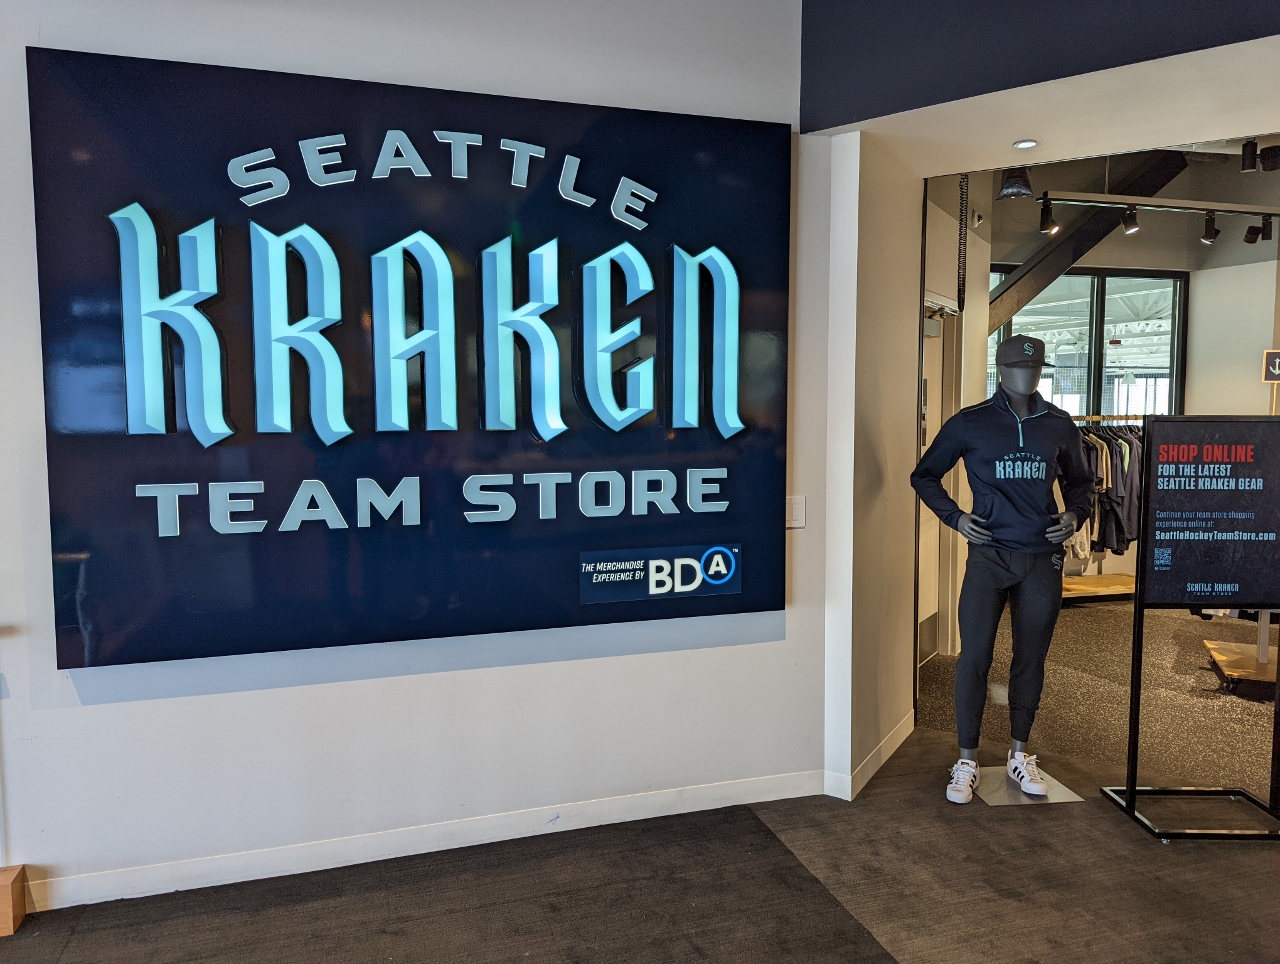 Seattle Kraken Team Store